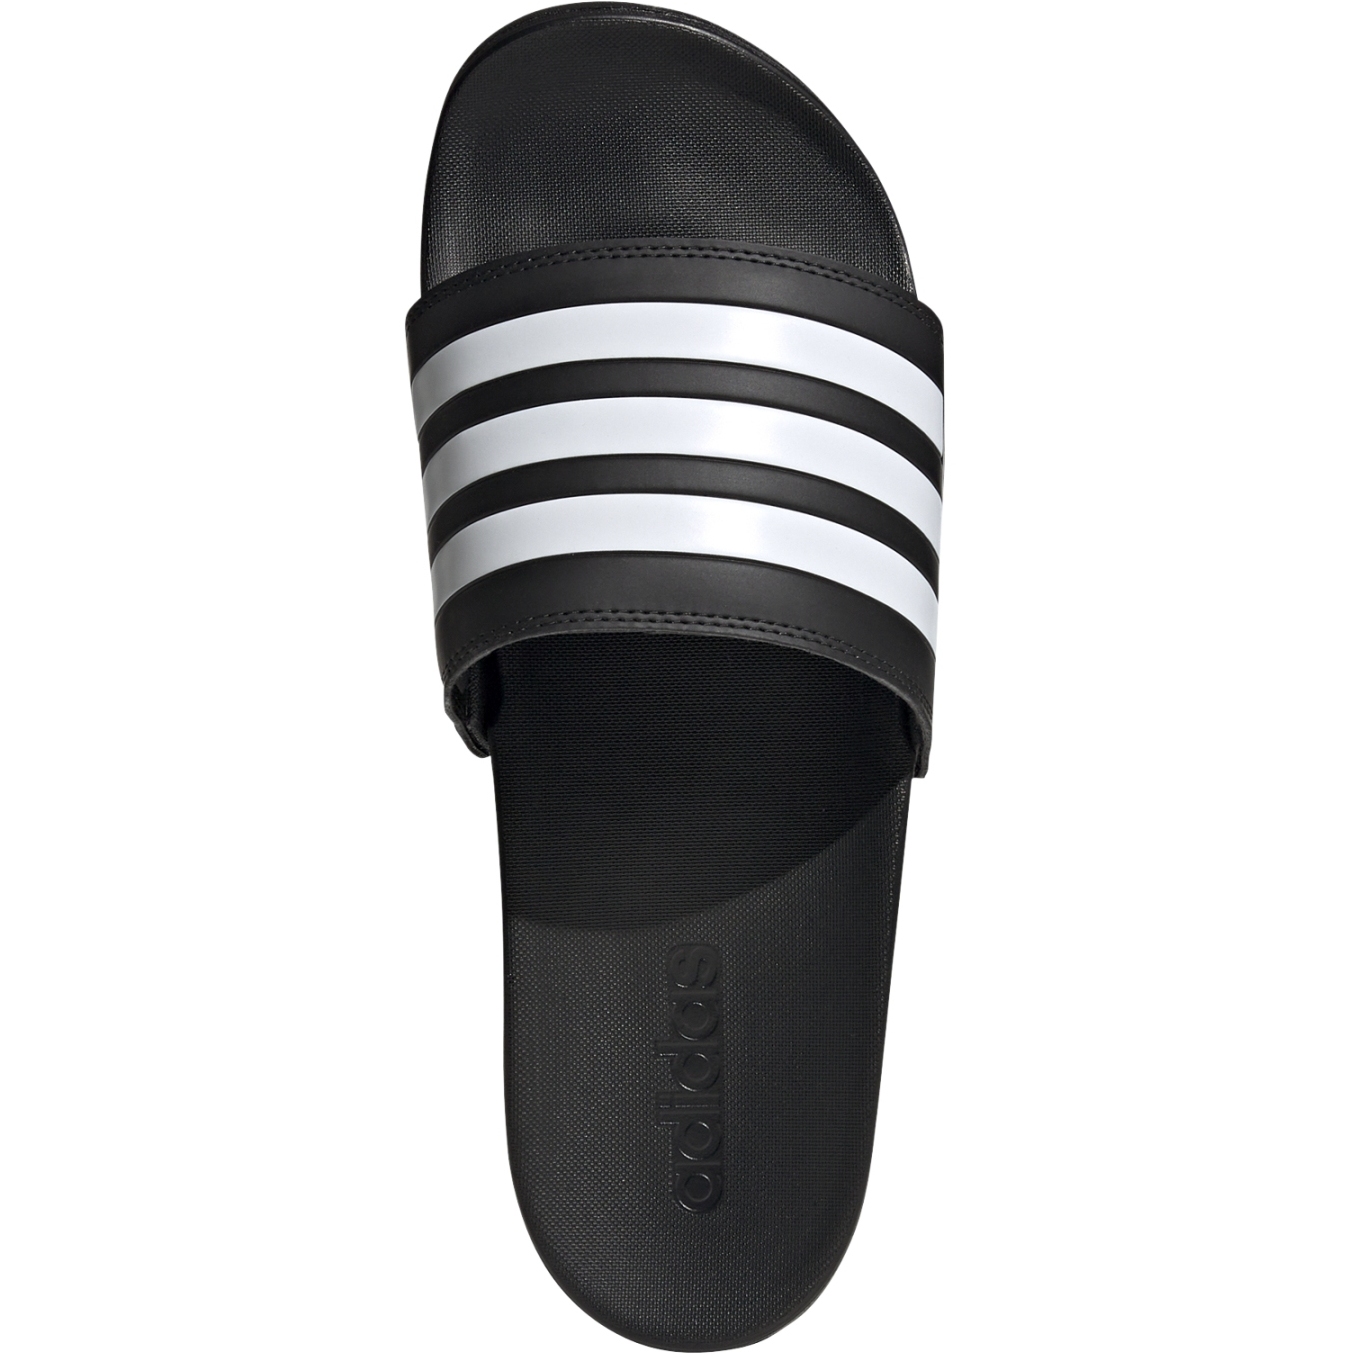 GZ5891 Comfort core - Adilette adidas black/weiss/core Badeschuhe black